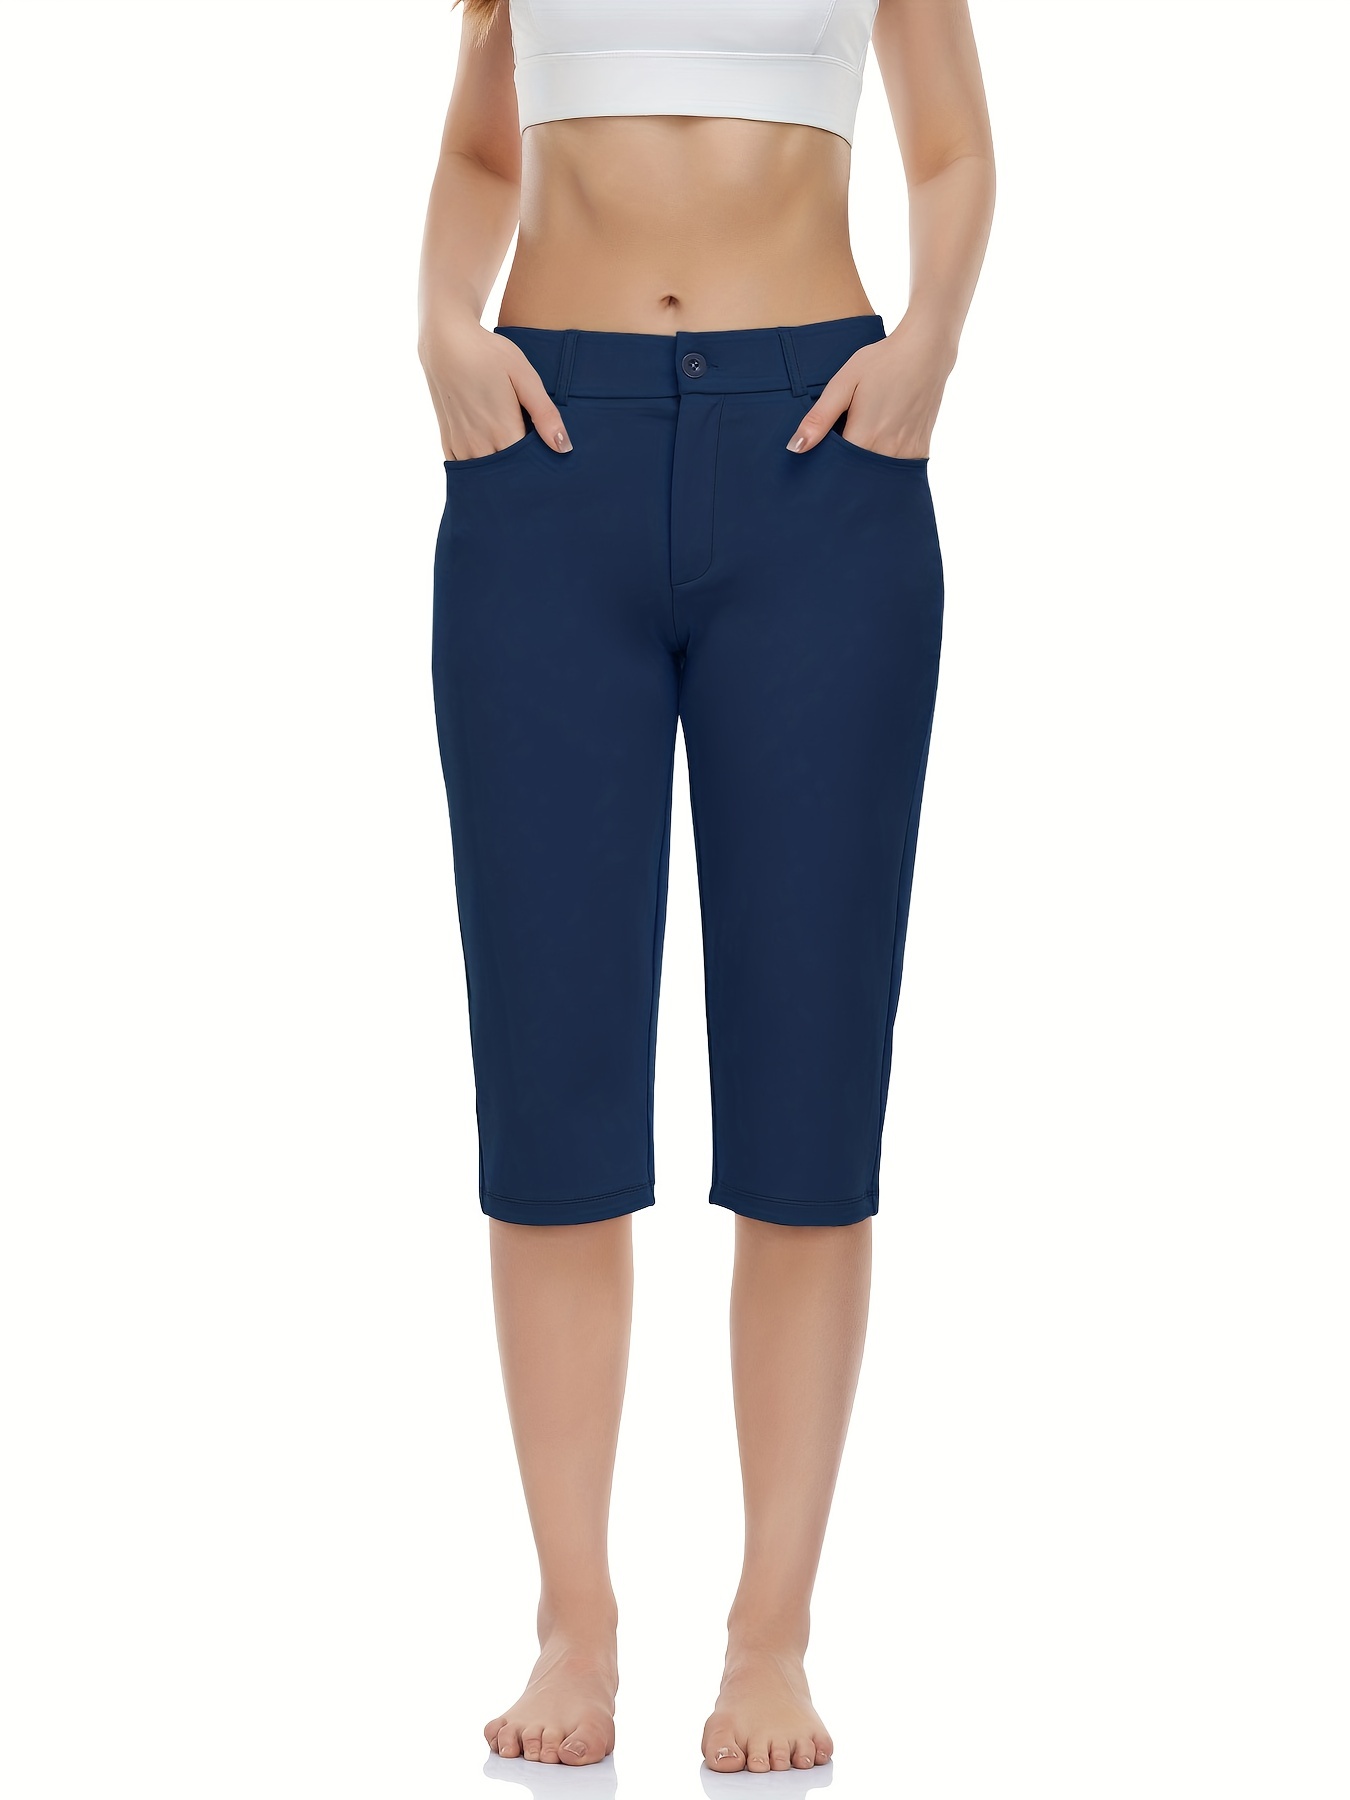 Capreze Womens Yoga Dress Pants Stretchy Flare Bell Bottoms Bootcut Office  Slacks Pocket Casual Business Work Lounge Pant